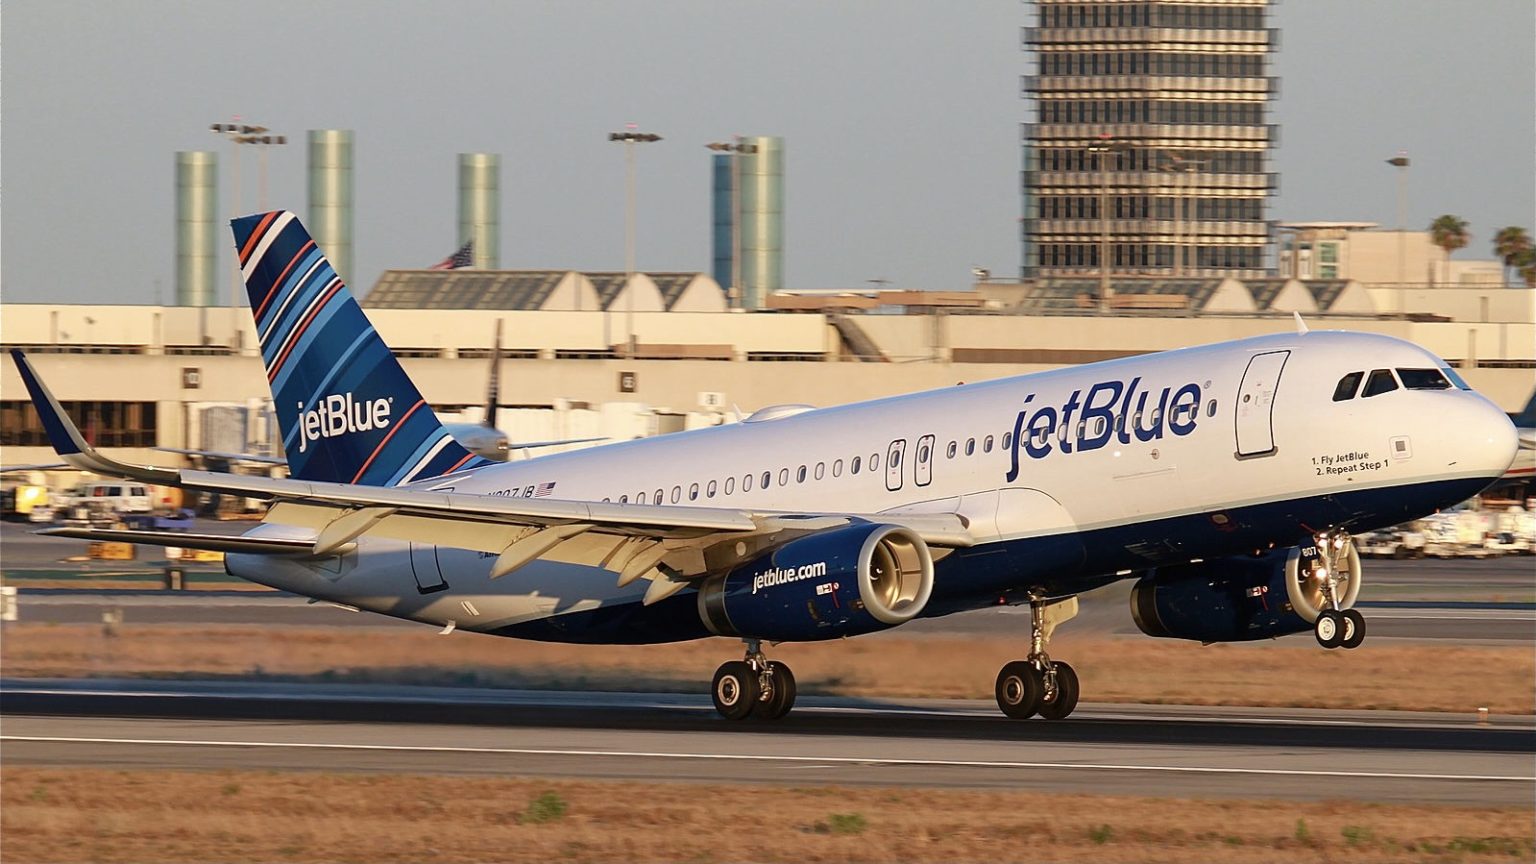 JetBlue airline plane. Photo: Babinski 380.